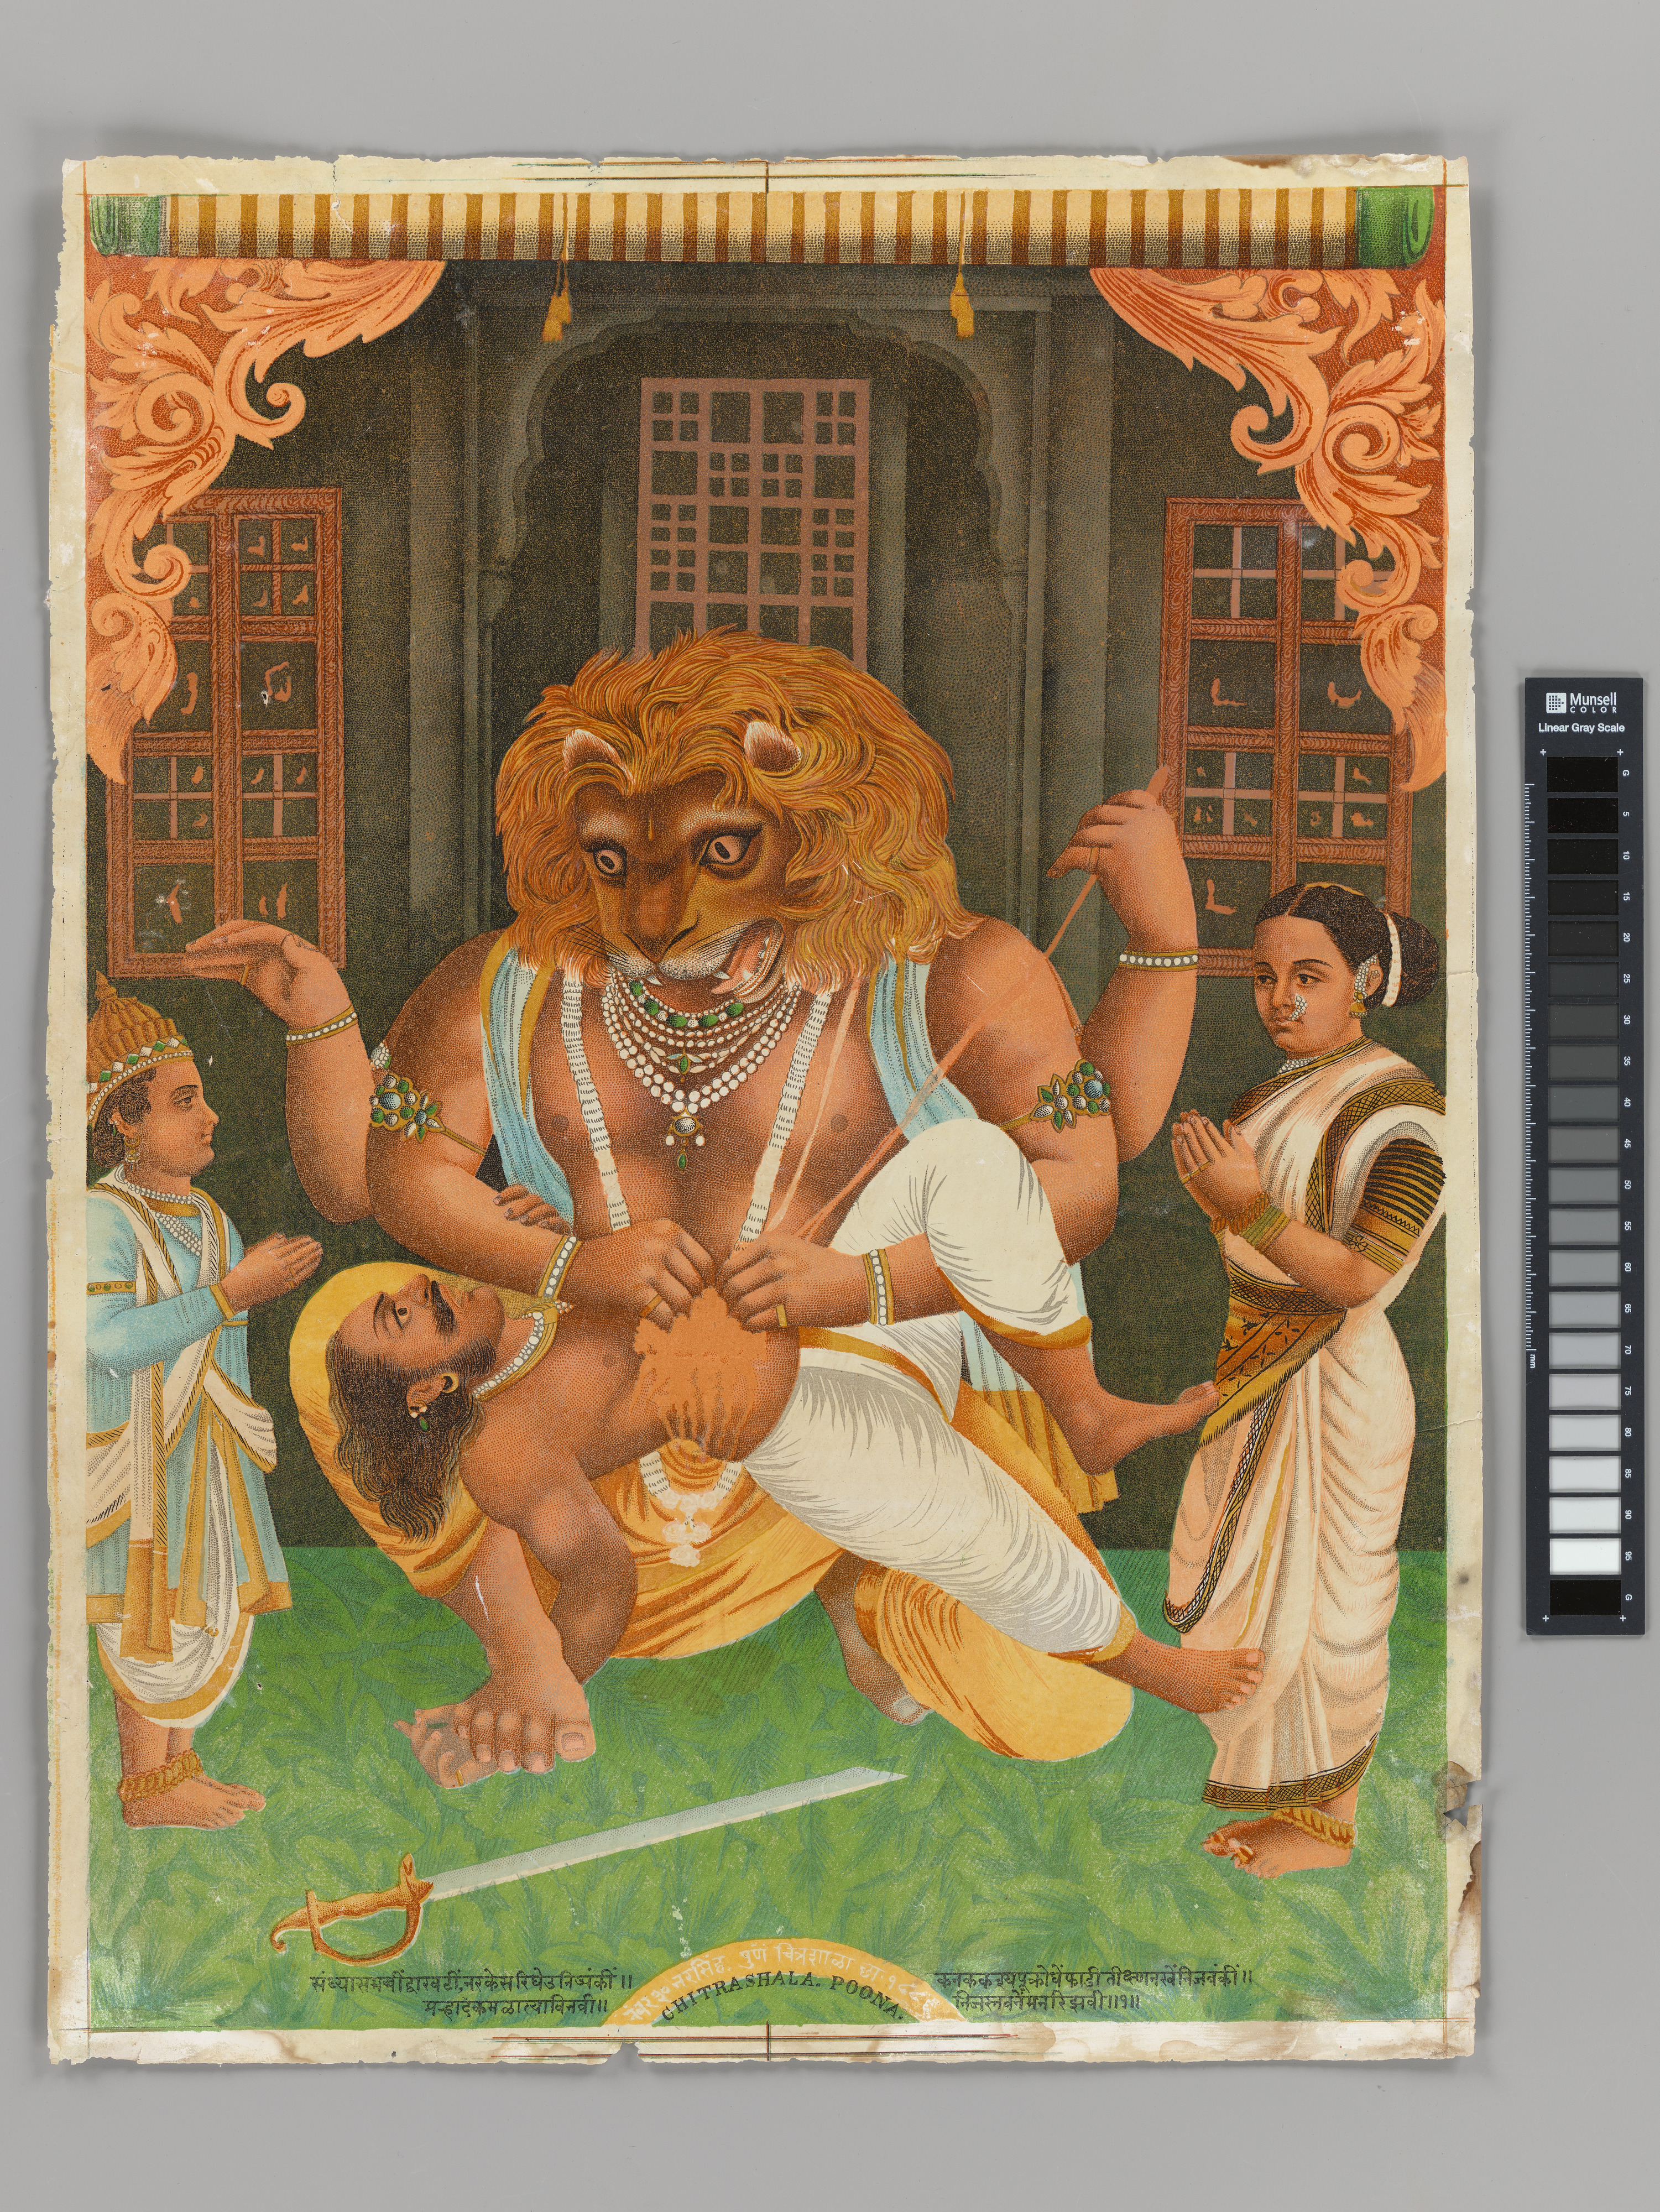 Vishnu avatars: Narasimha, ca. 1886, Pune, India, The Metropolitan Museum of Art, New York, NY, USA.